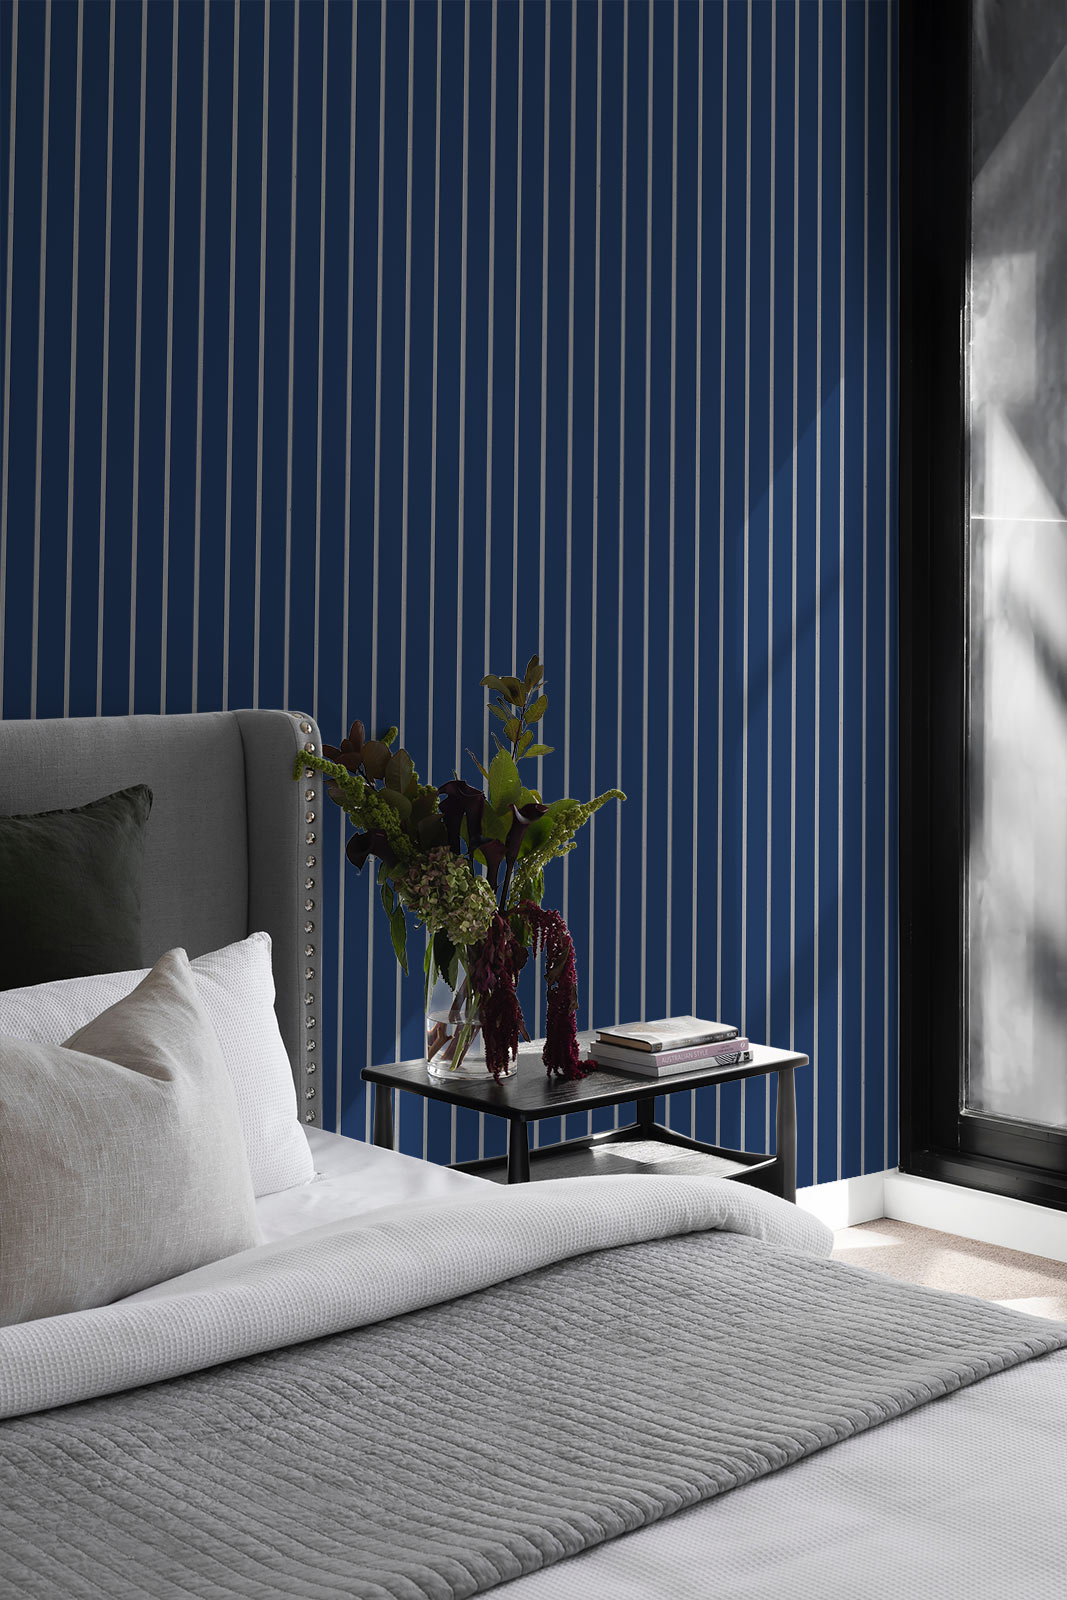 Loft Stripes – Blue & Grey